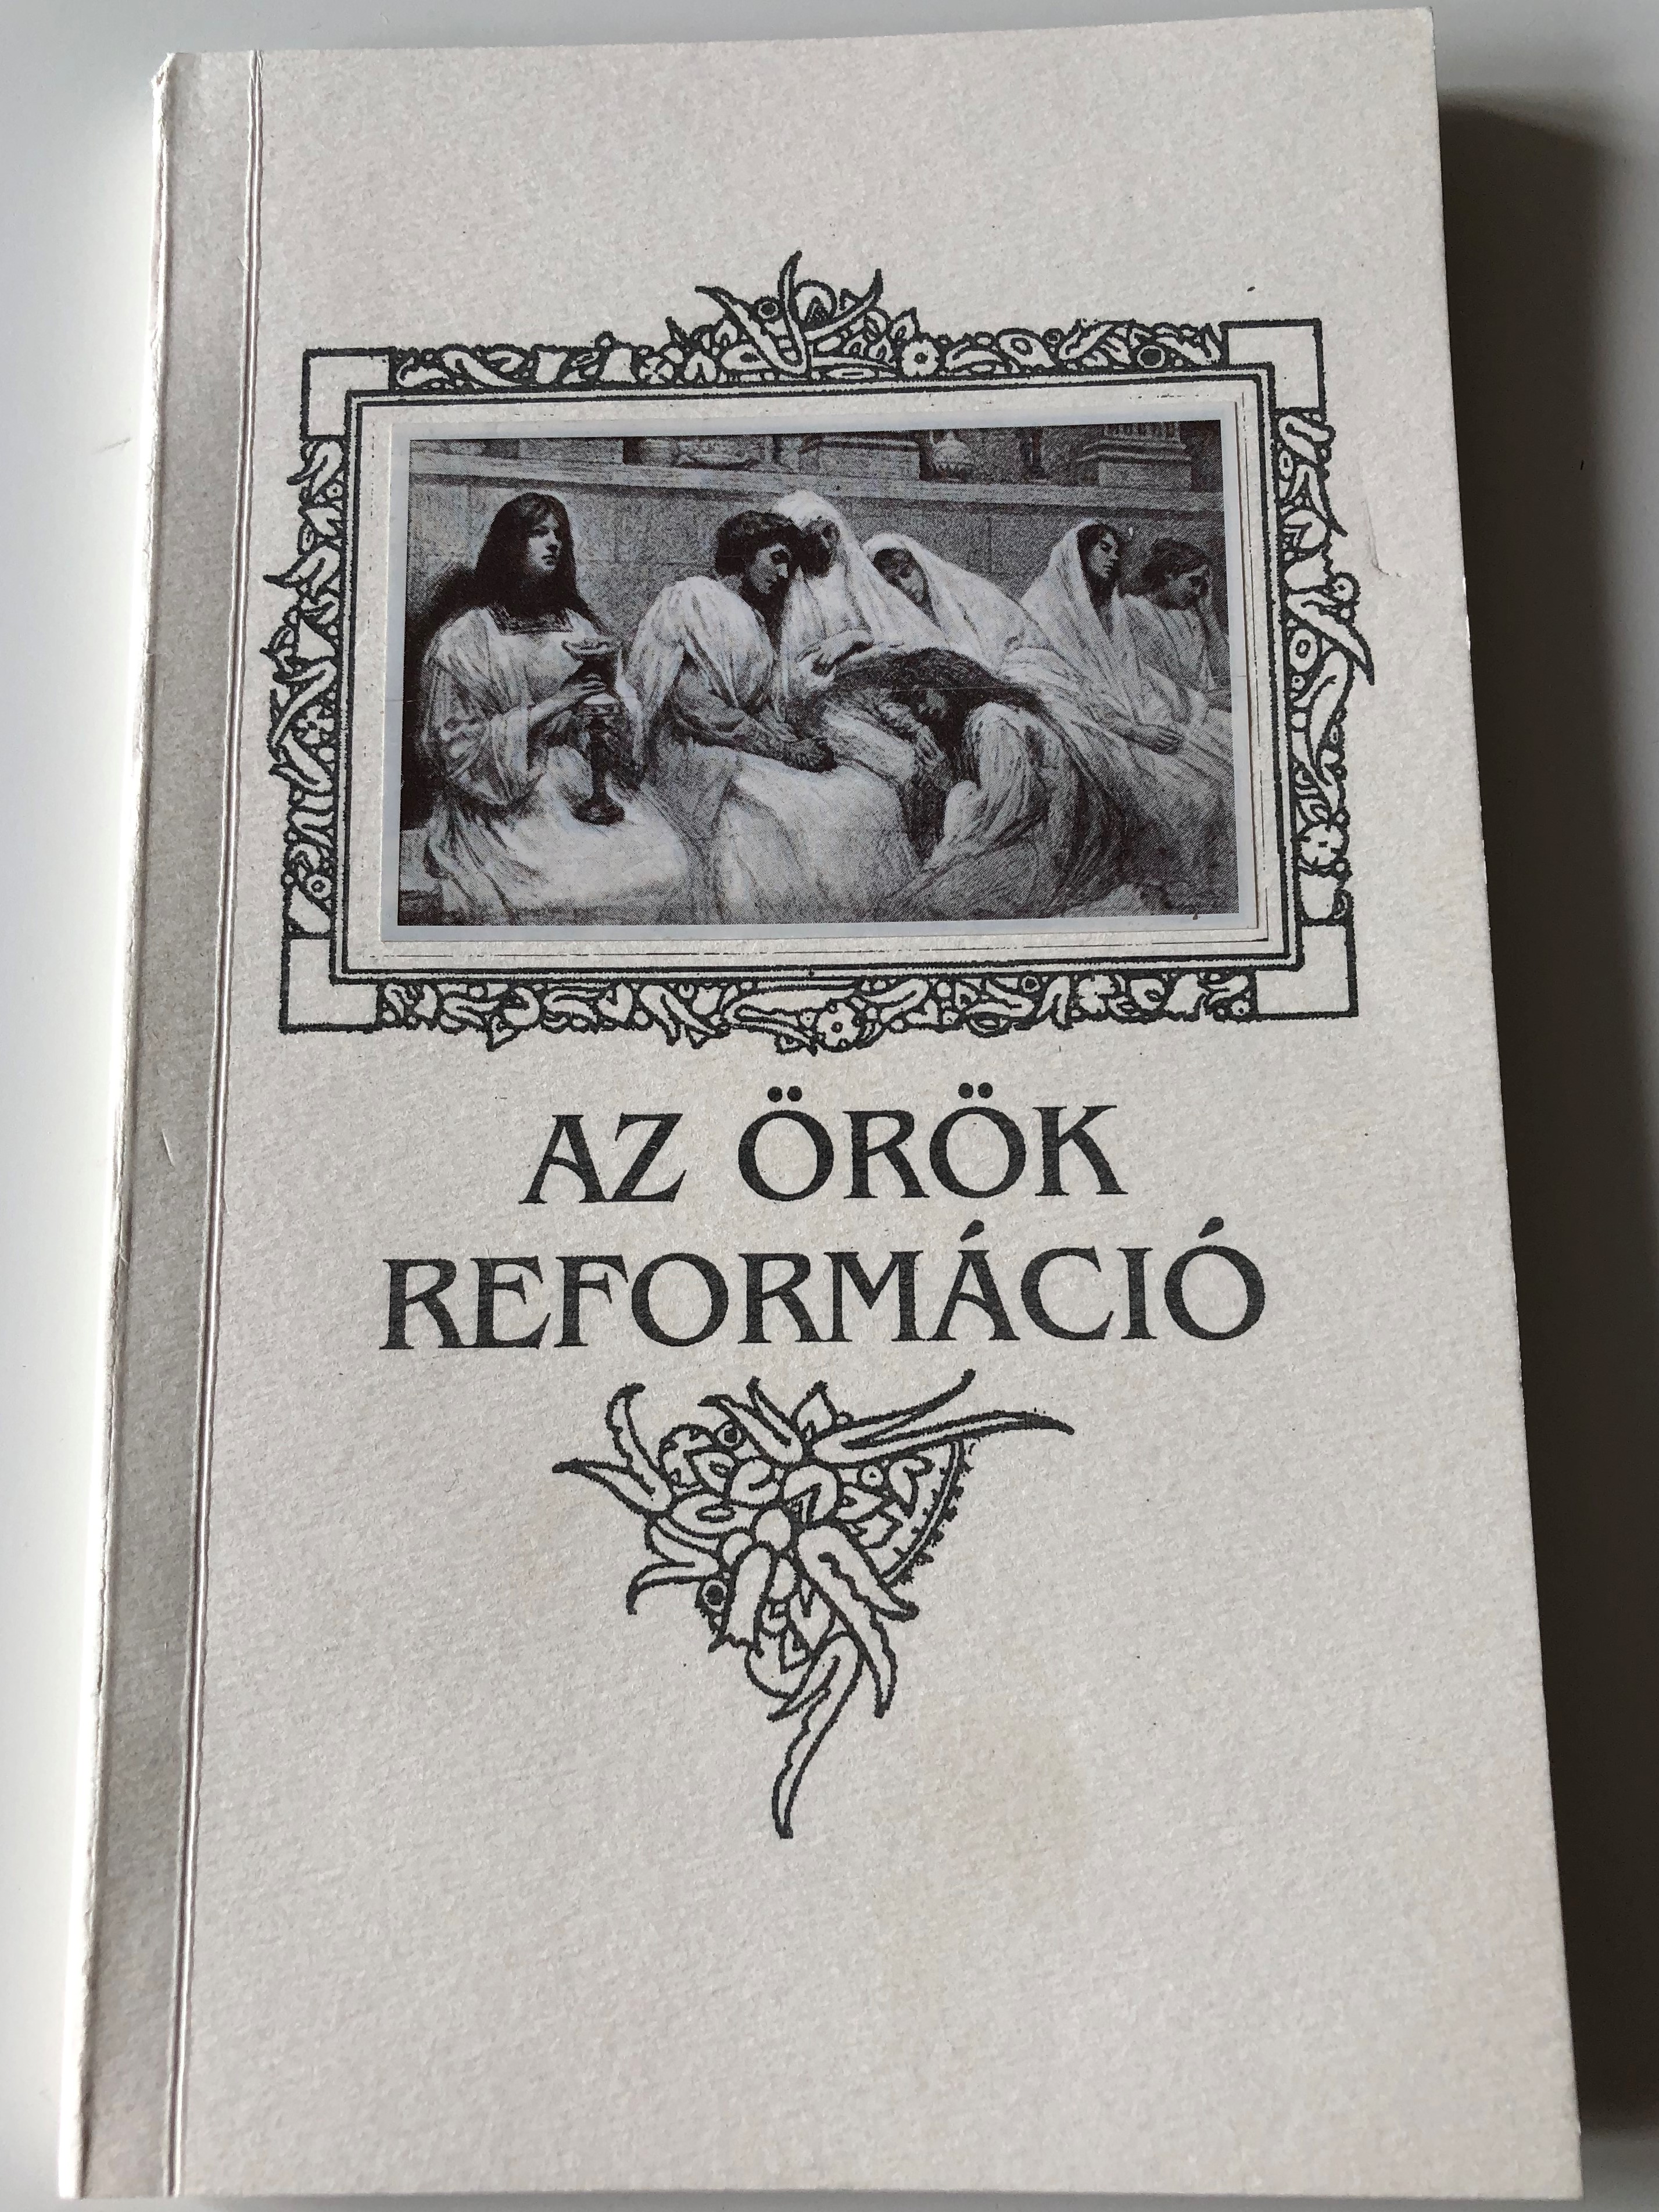 az-r-k-reform-ci-by-csia-lajos-the-eternal-reformation-hungarian-language-book-on-the-reformation-ecclesia-semper-reformari-debeti-sz-zszorsz-p-kiad-1-.jpg